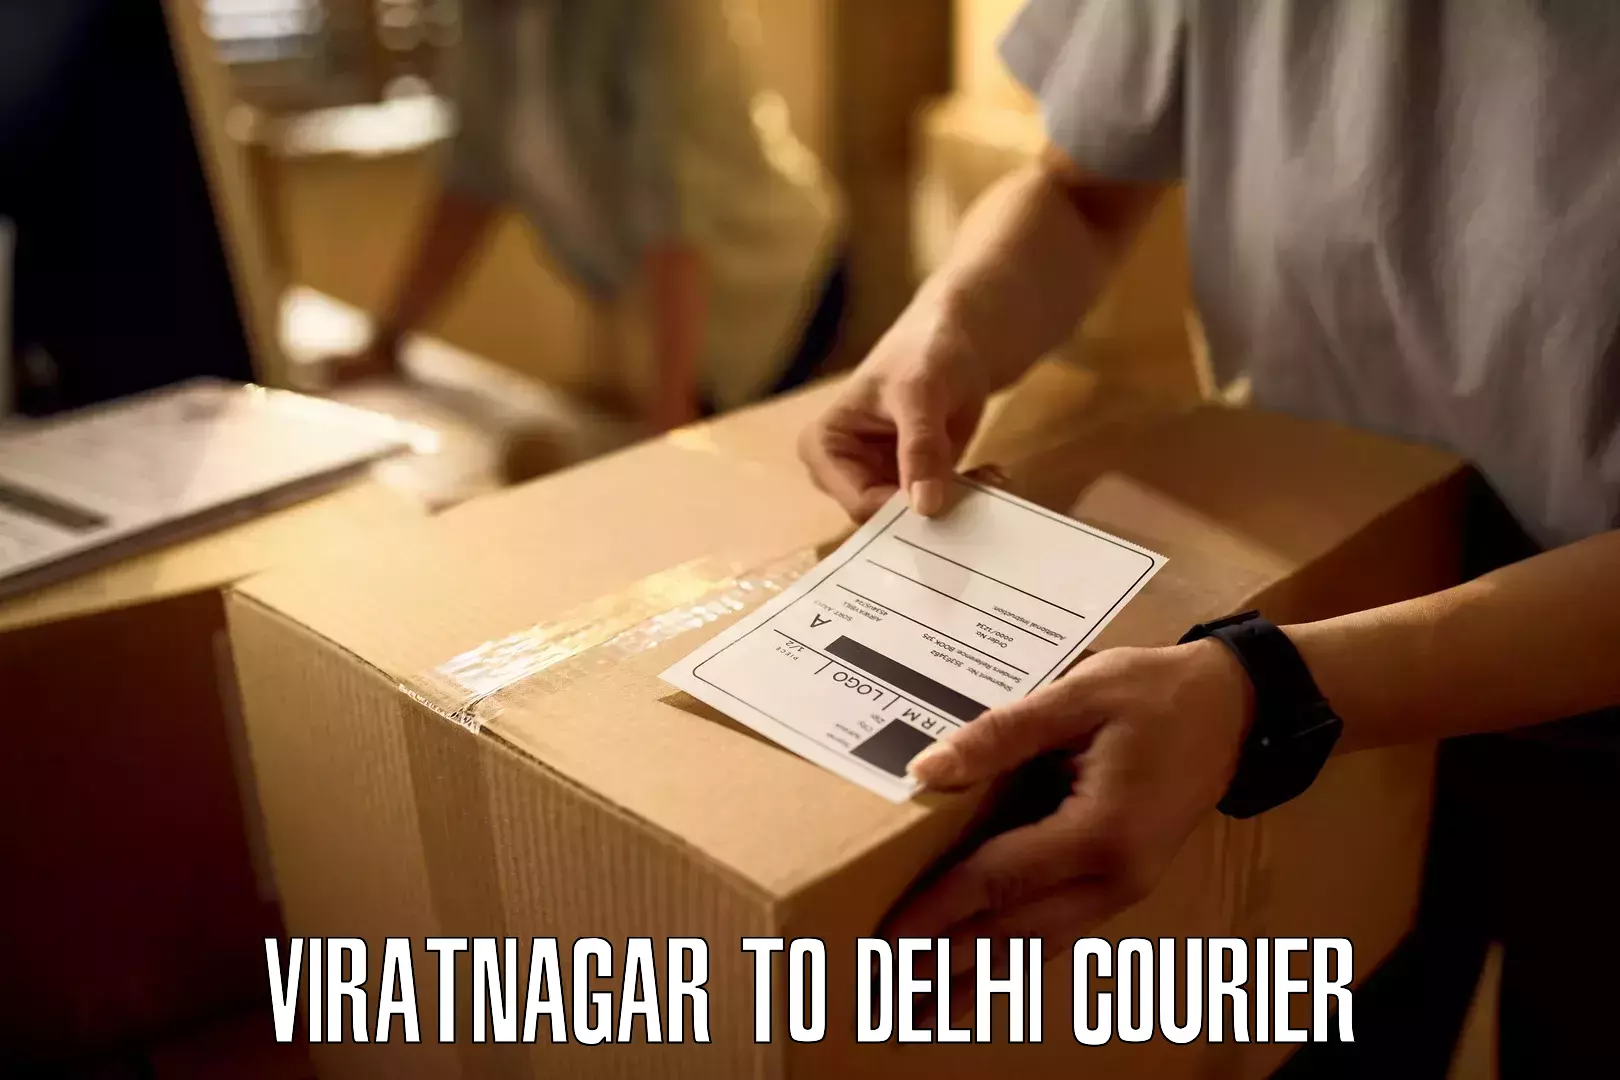 Urban courier service Viratnagar to Lodhi Road